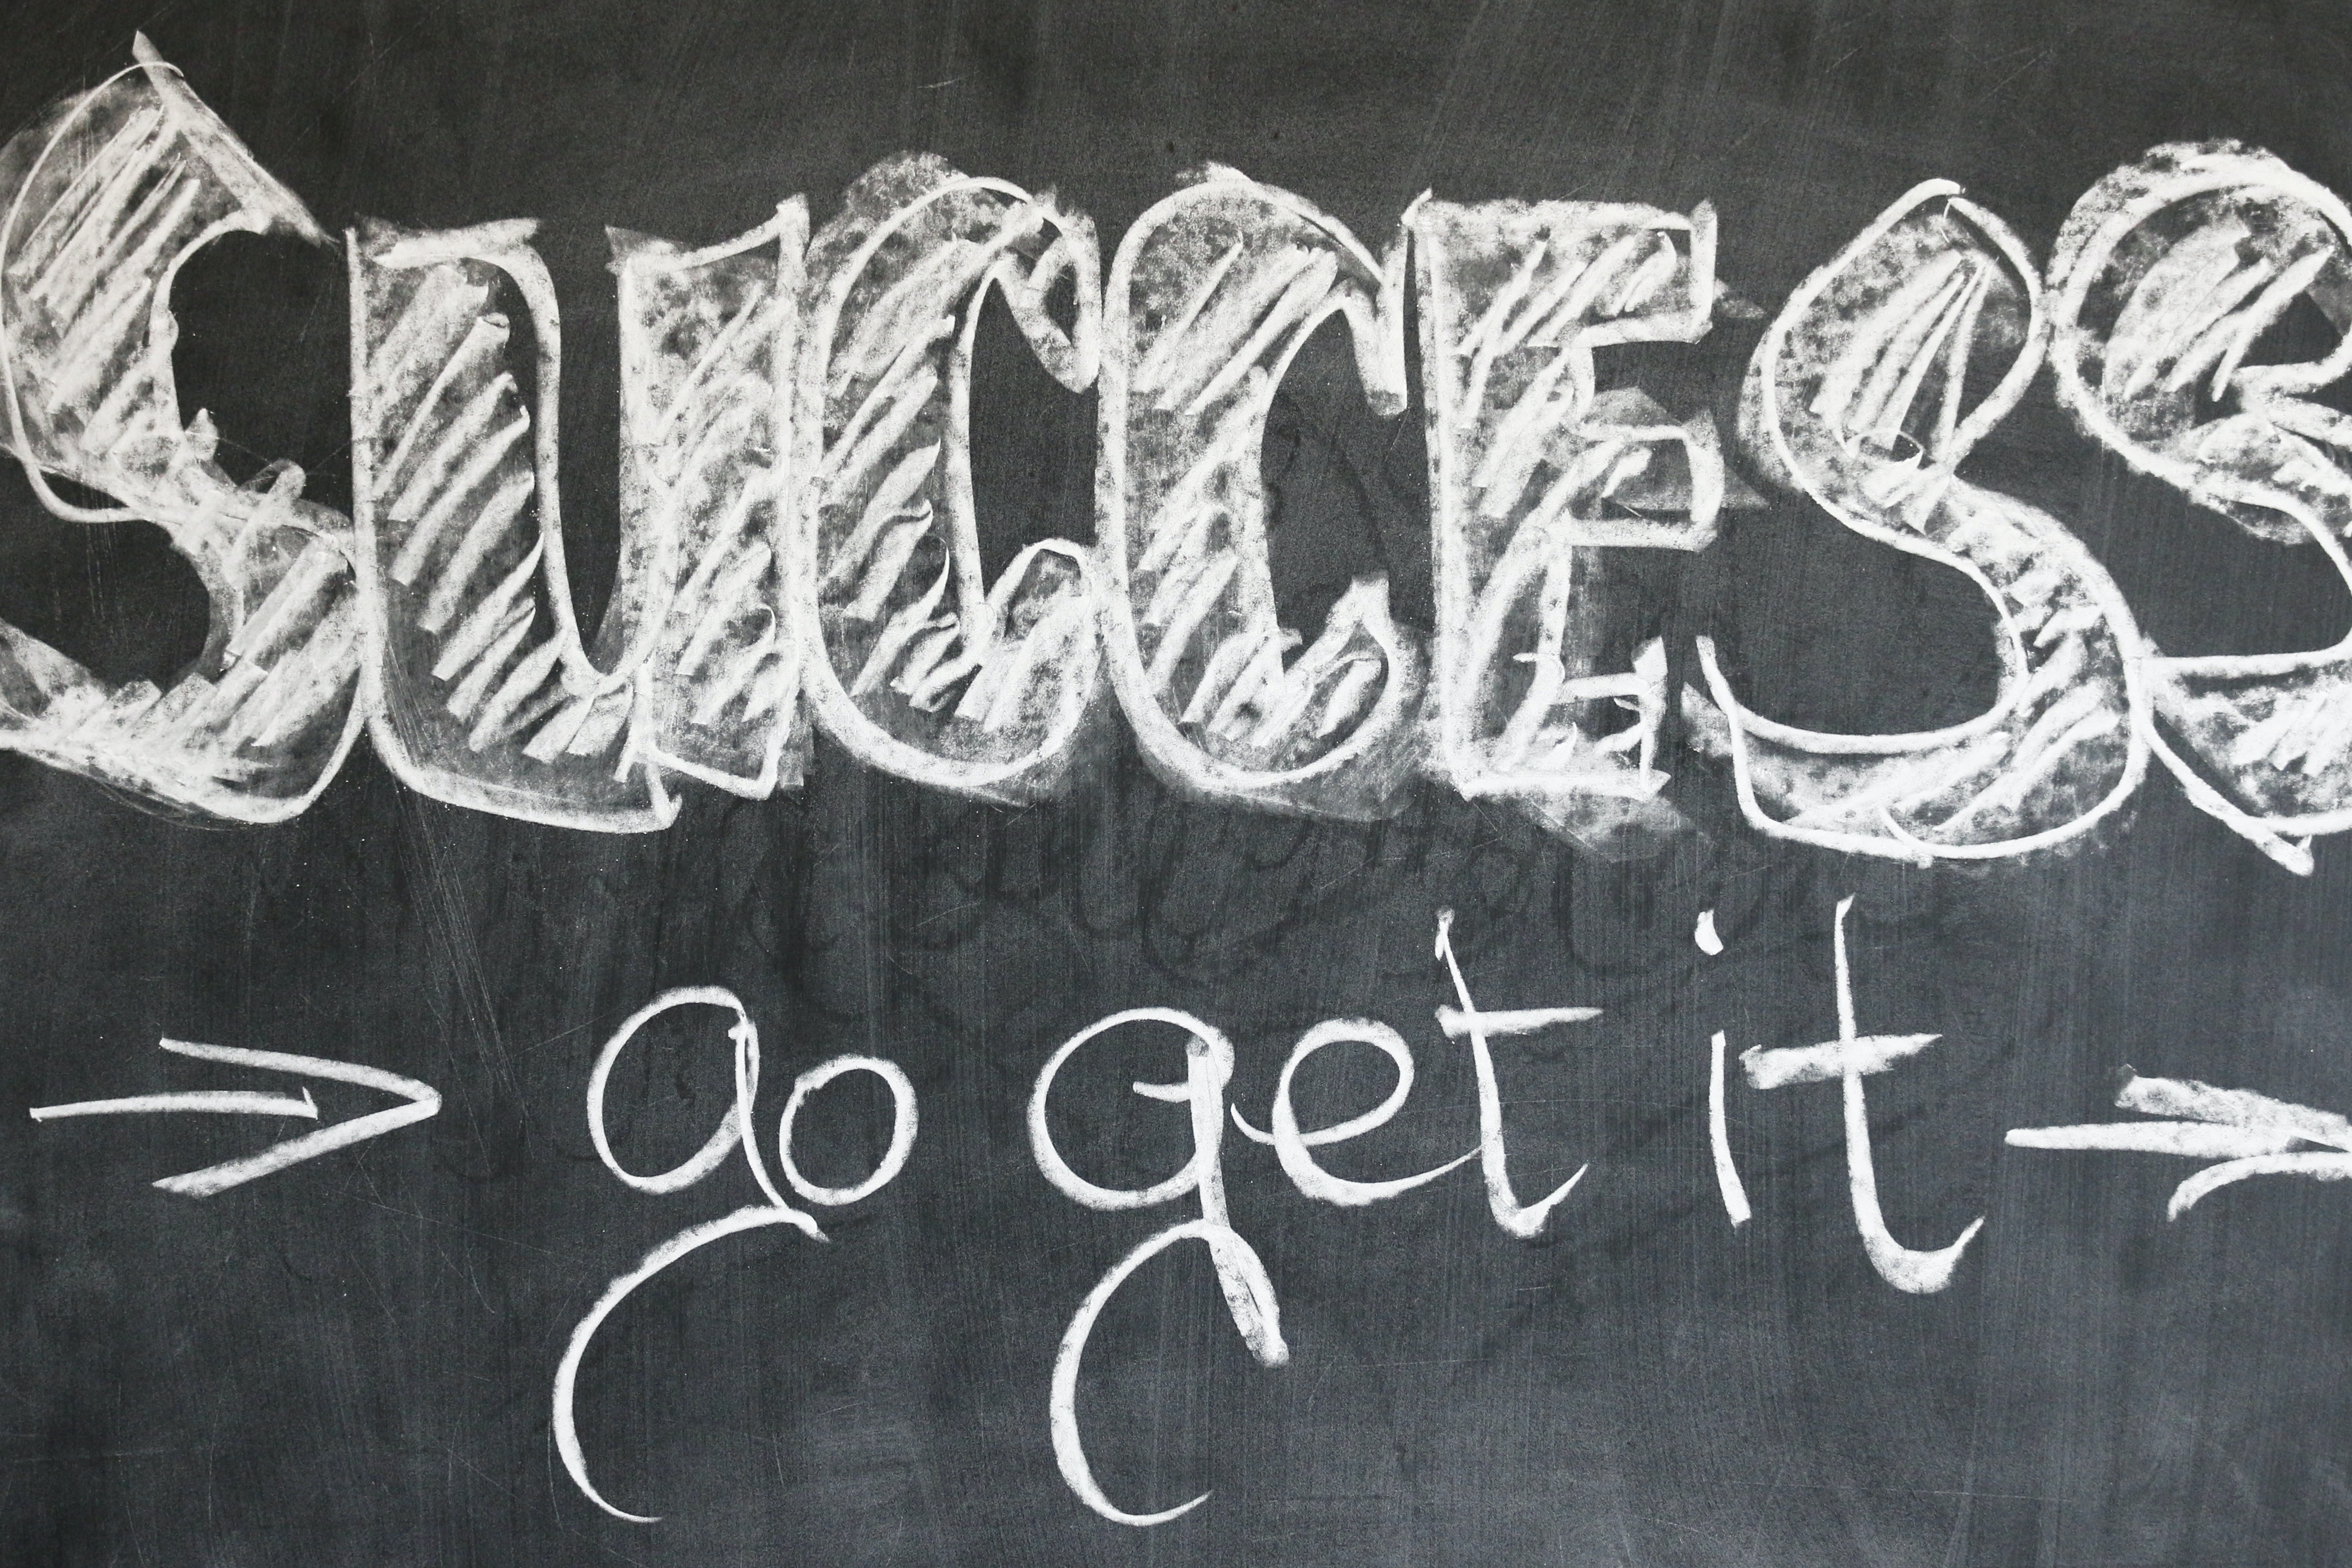 Chalkboard that reads "Success: go get it"